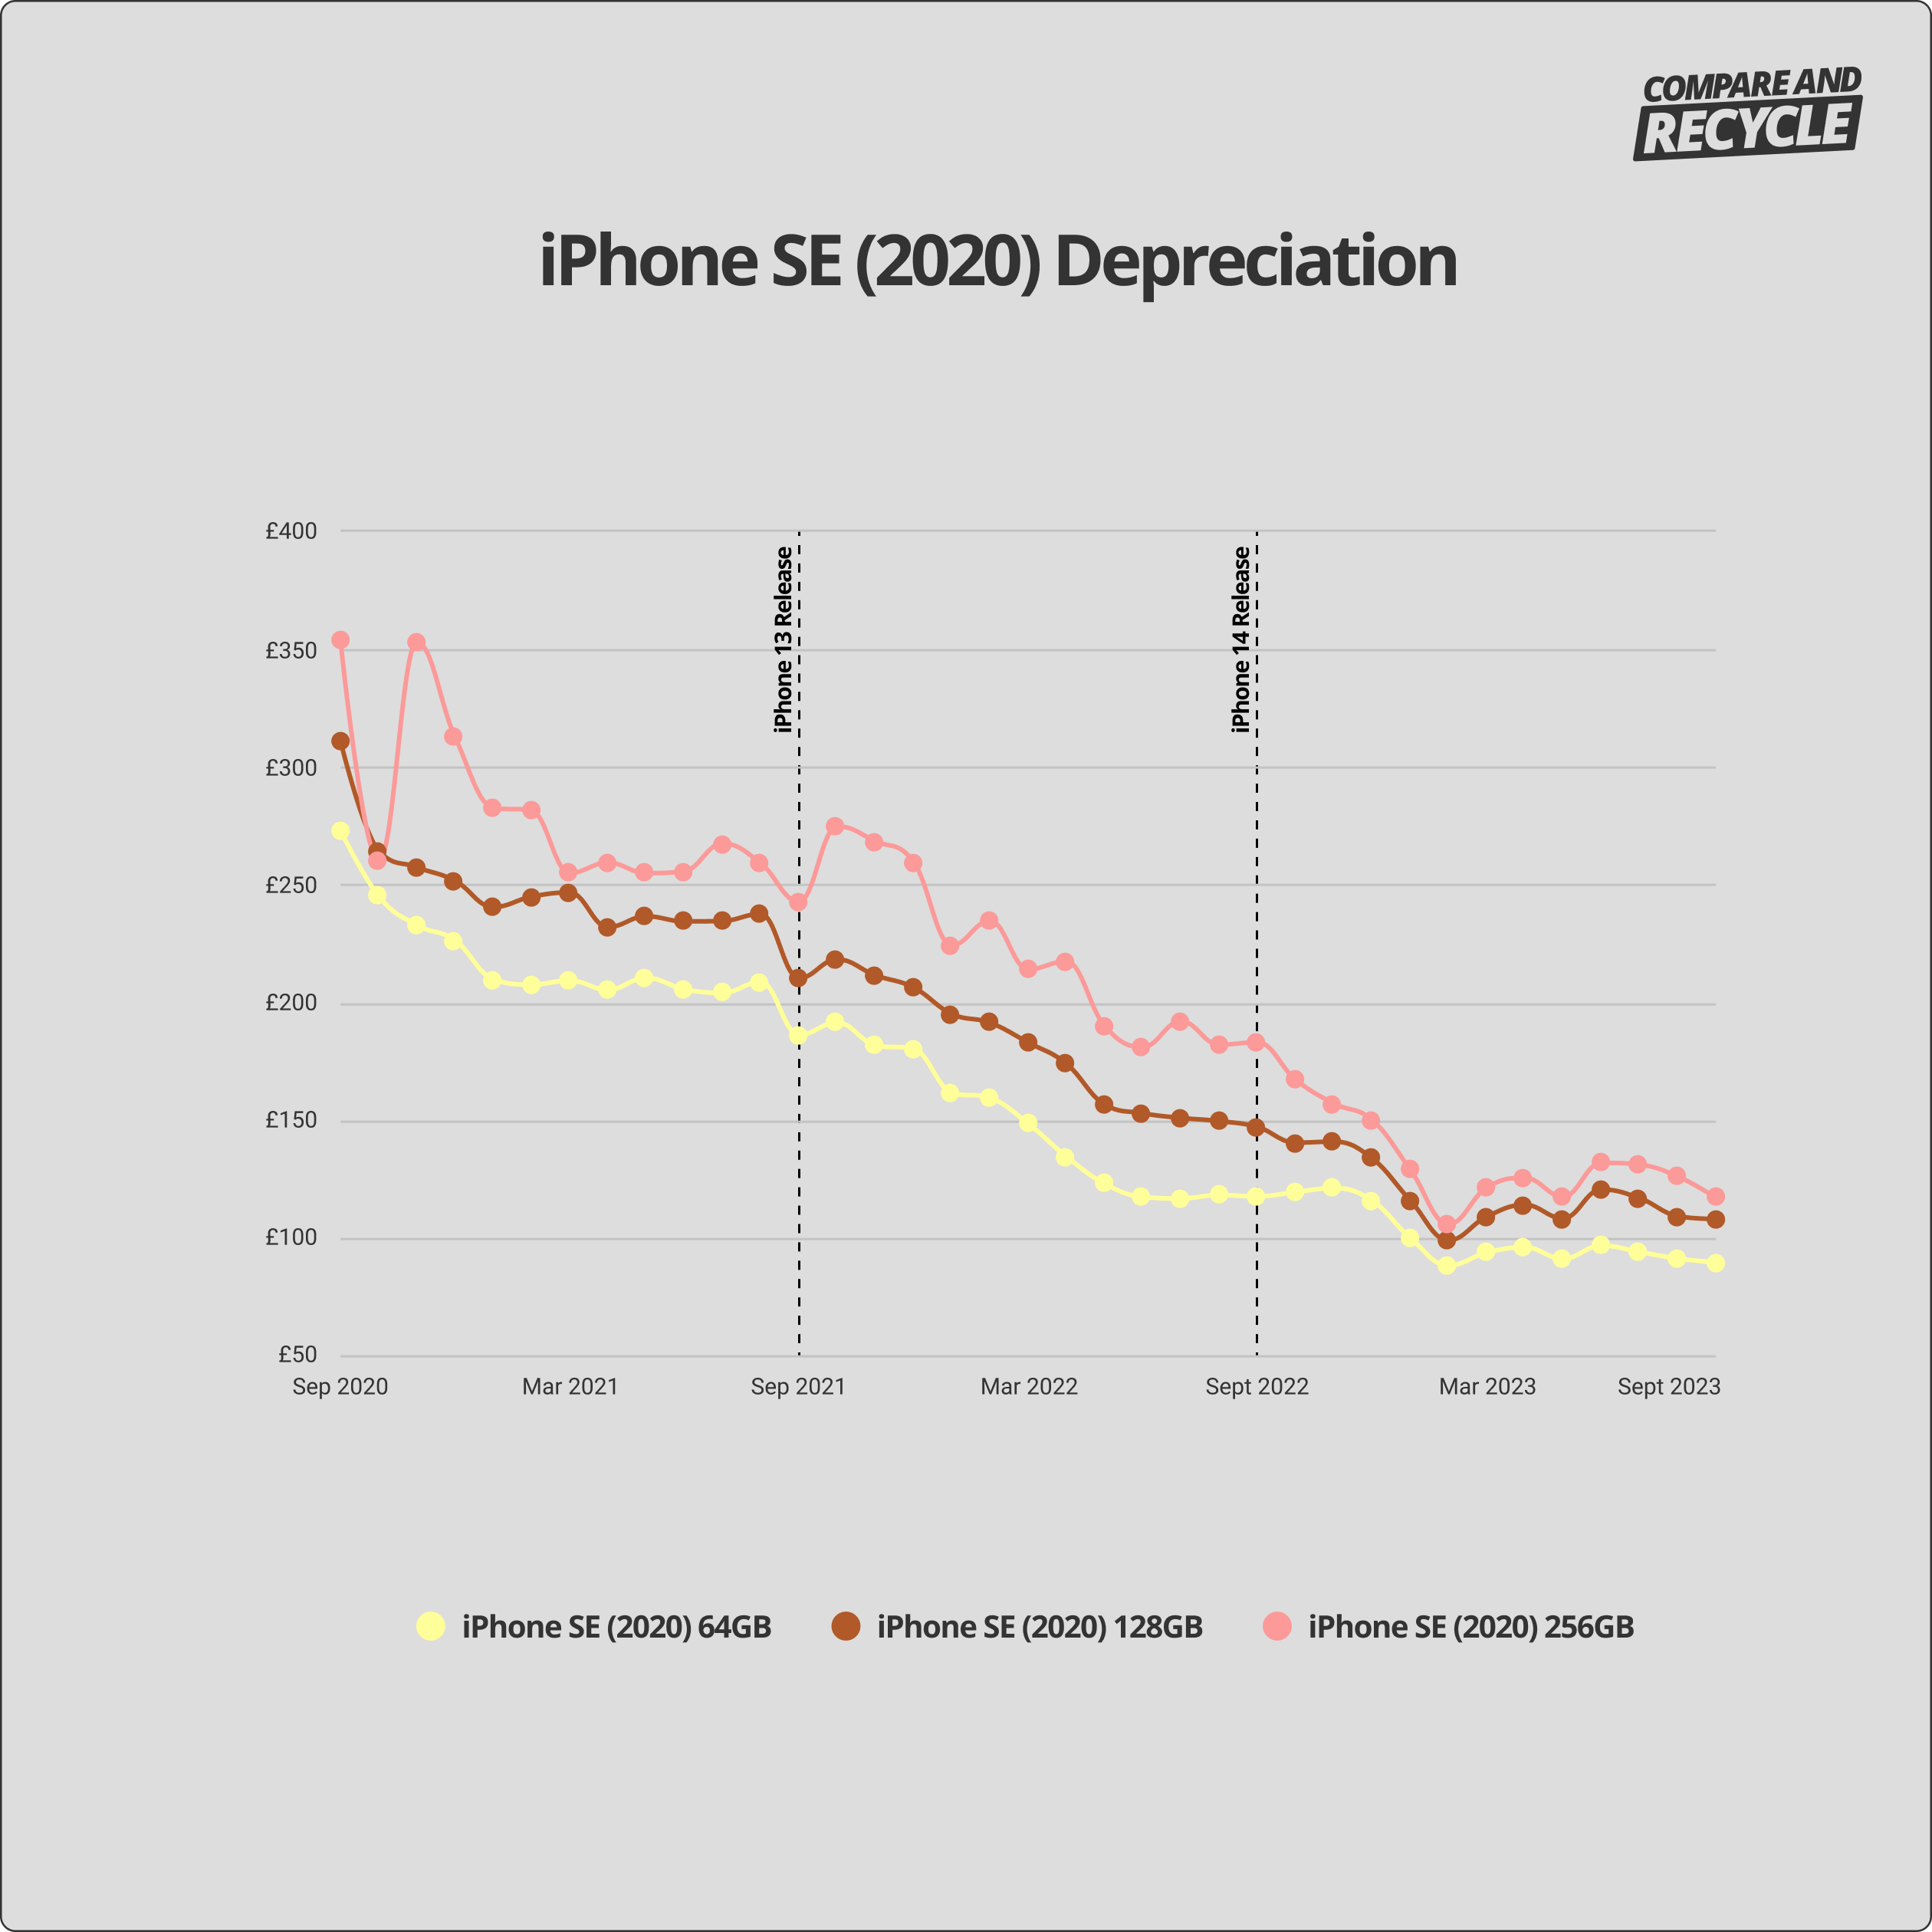 iPhone SE (2020) depreciation graph